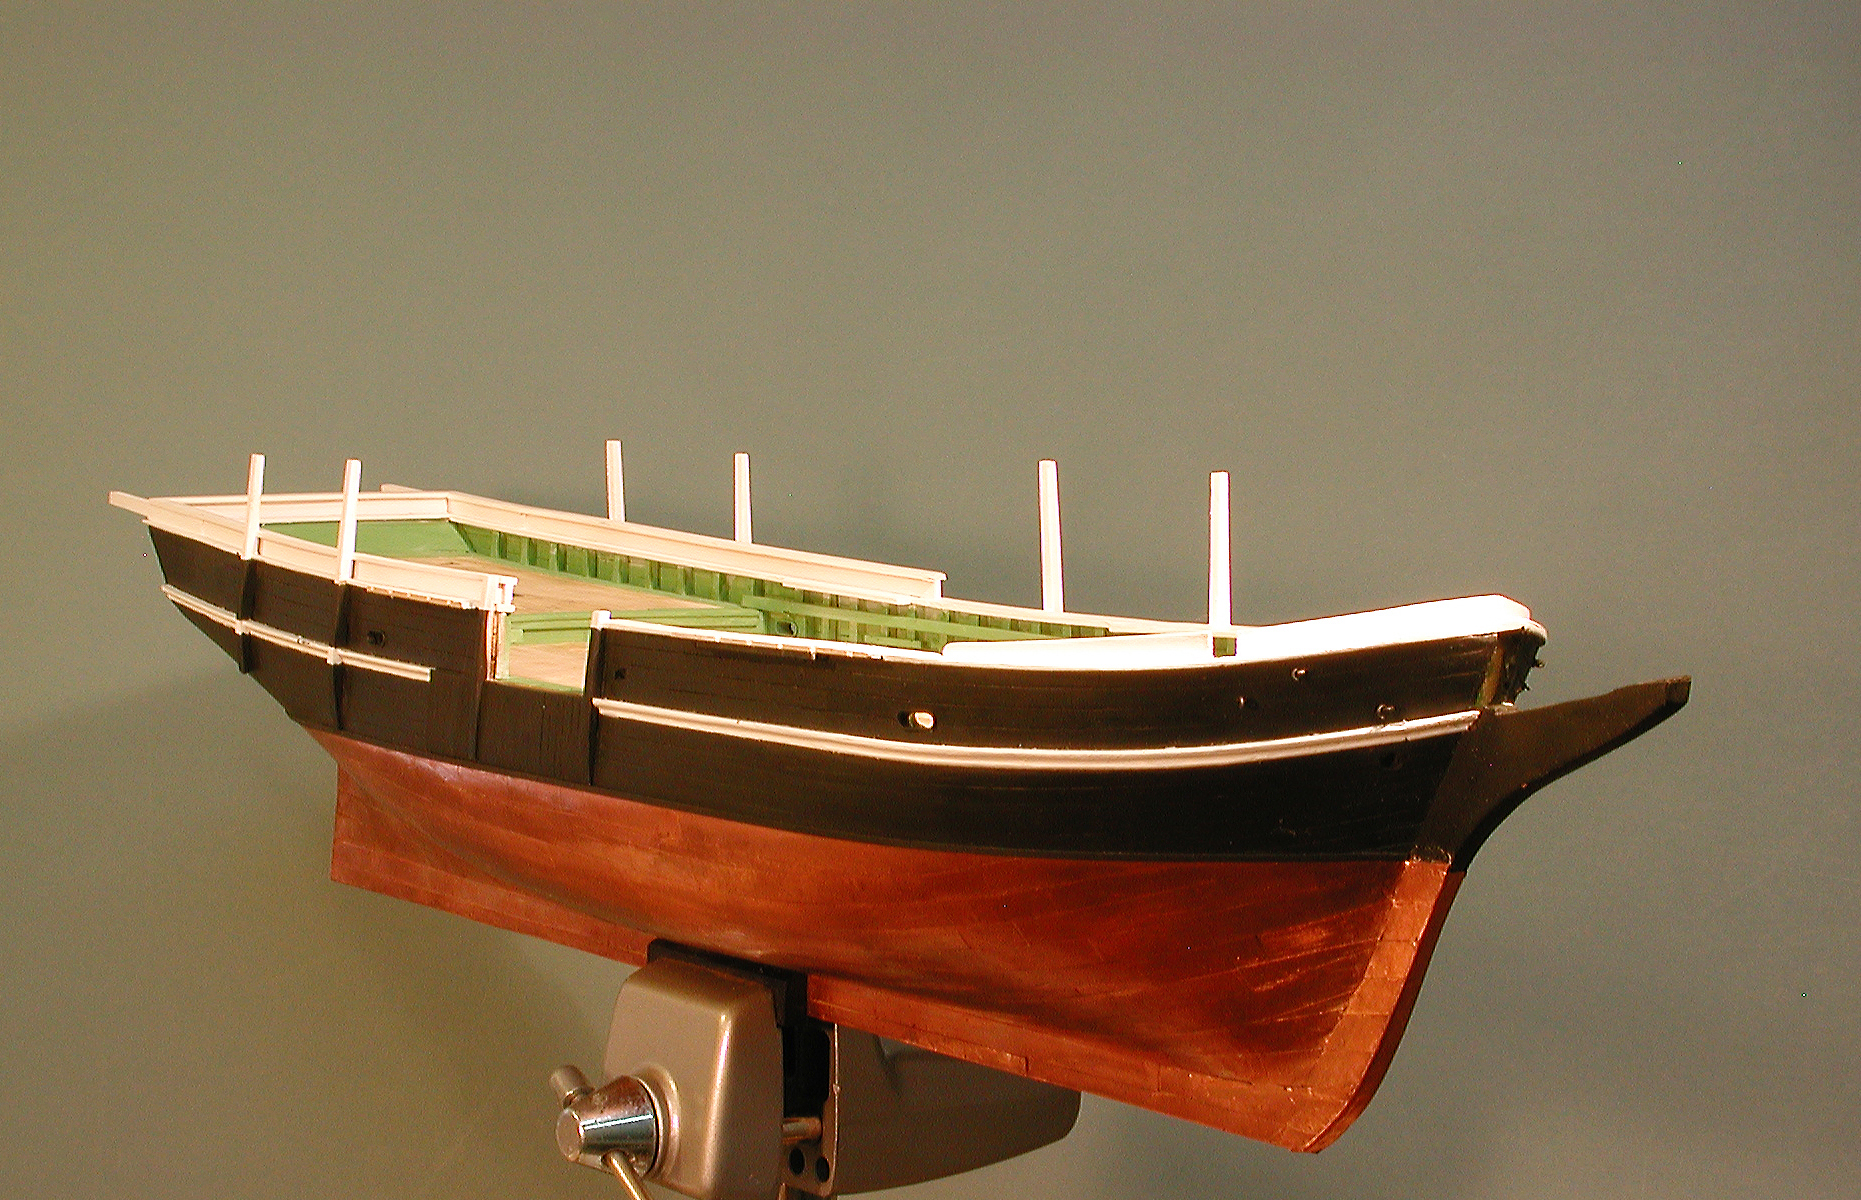 3 Sheets Model Shipways Kate Cory Plans